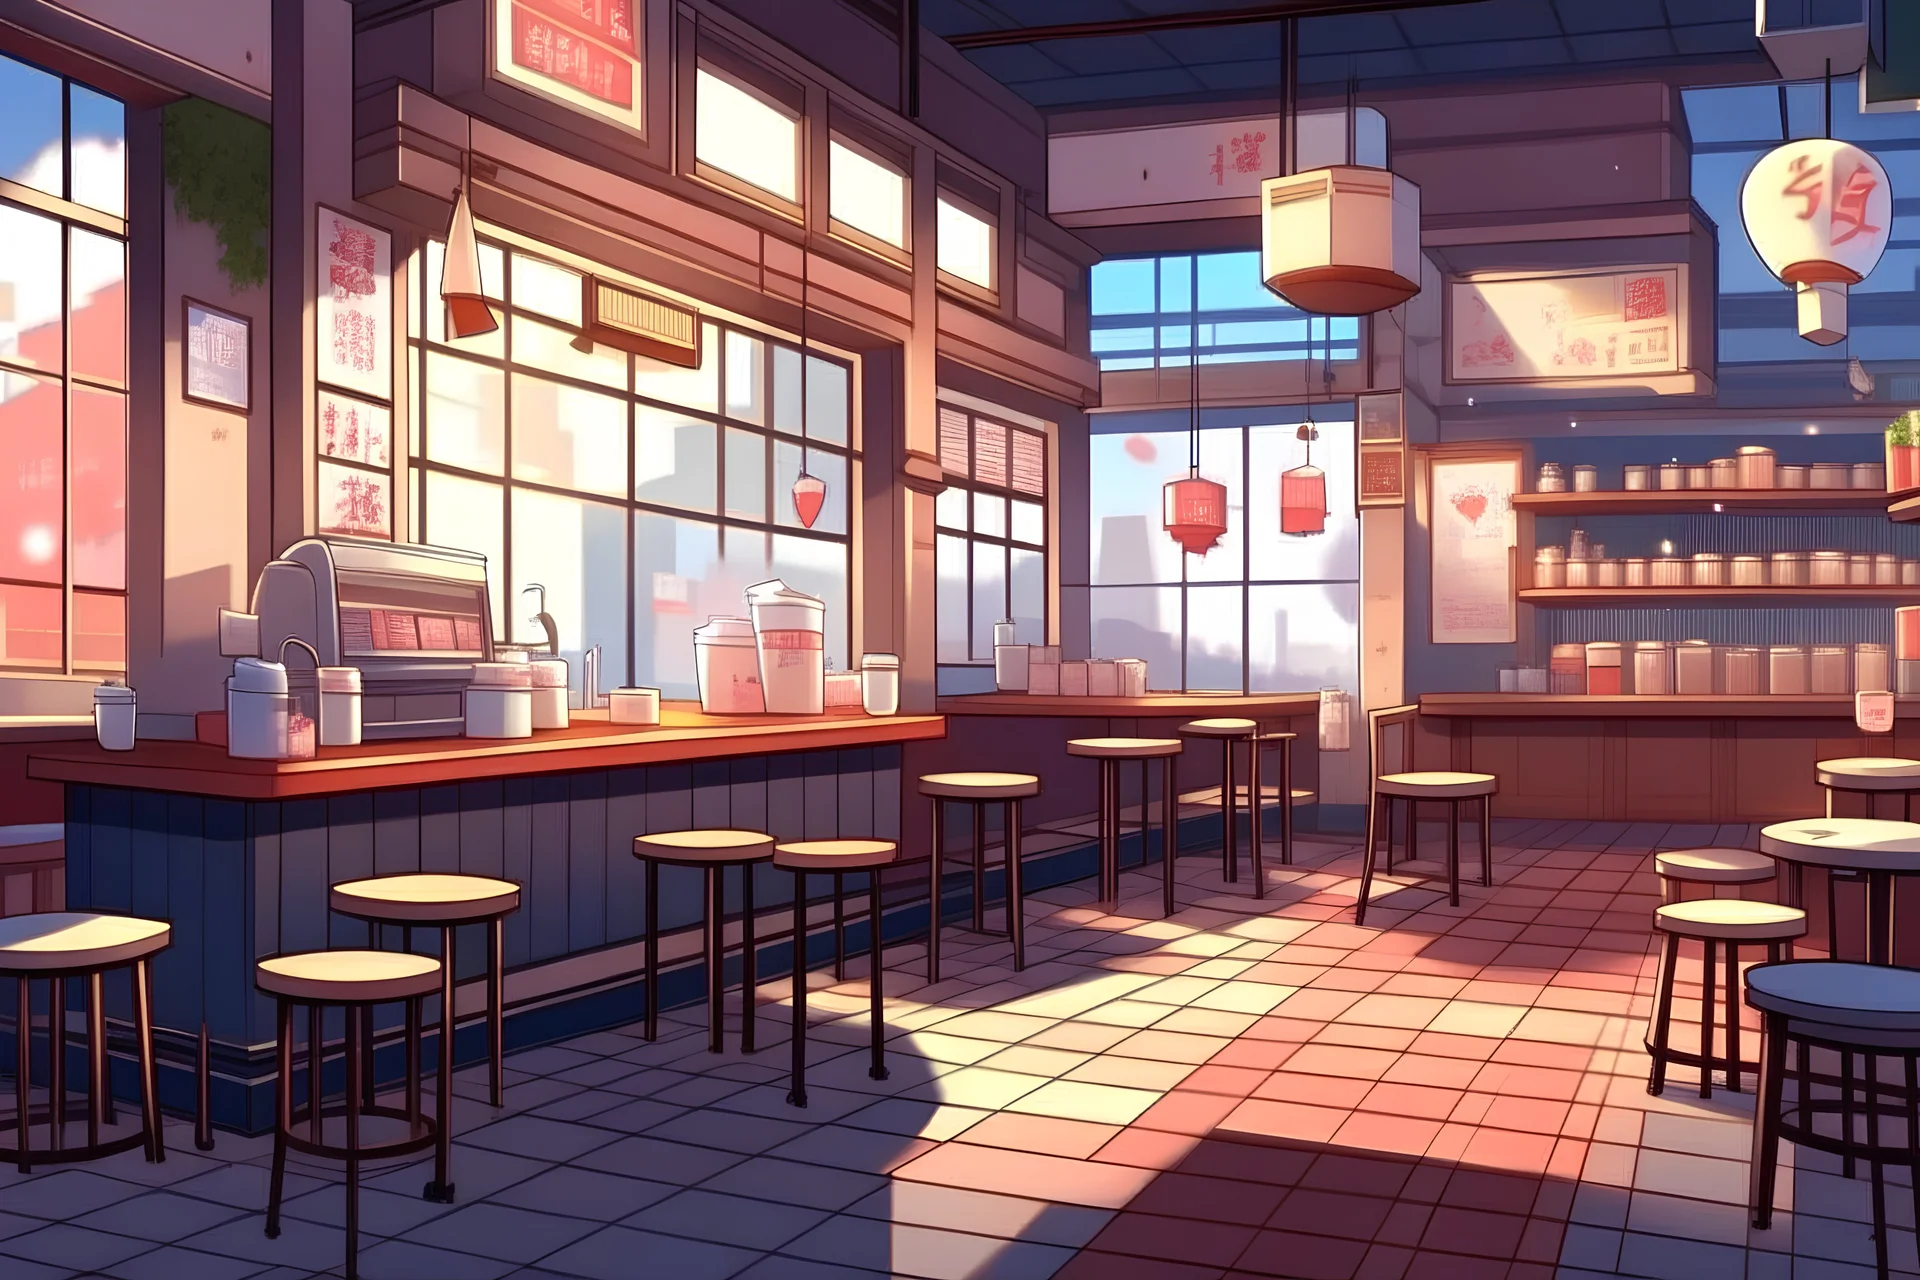 Cute Fantasy Chibi Anime Cafe in Pastel